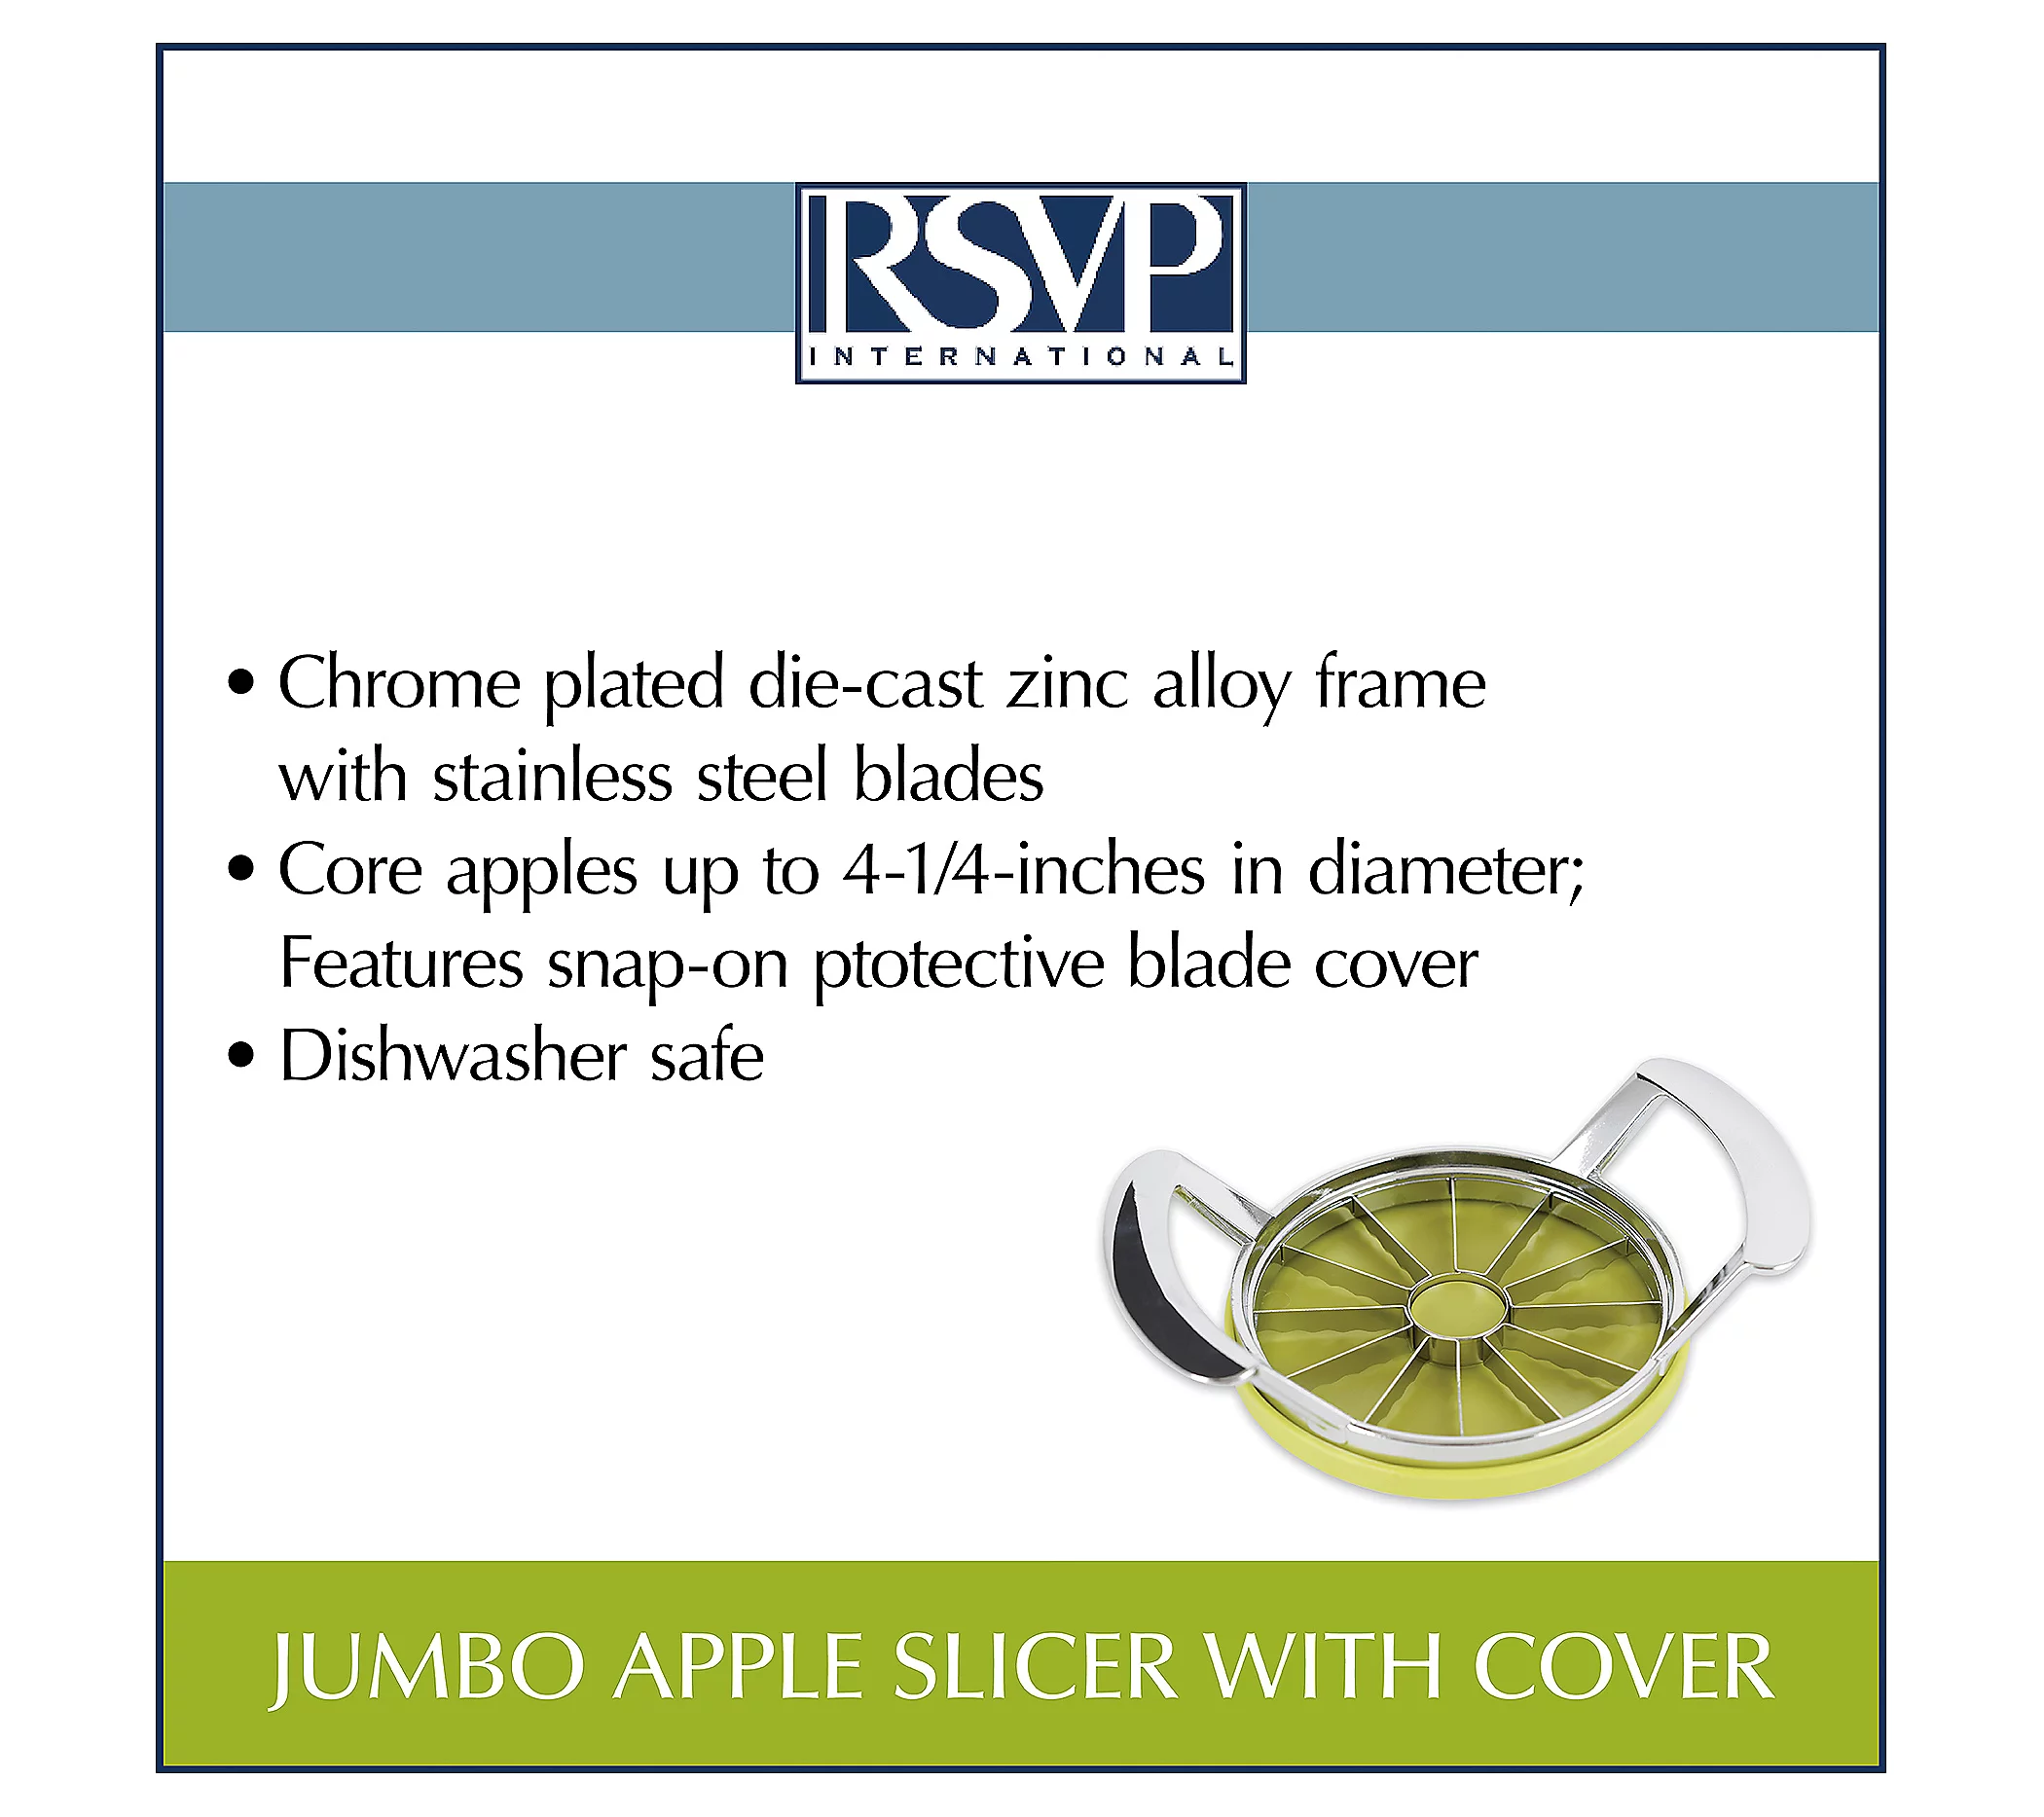 RSVP Jumbo Apple Slicer With Cover